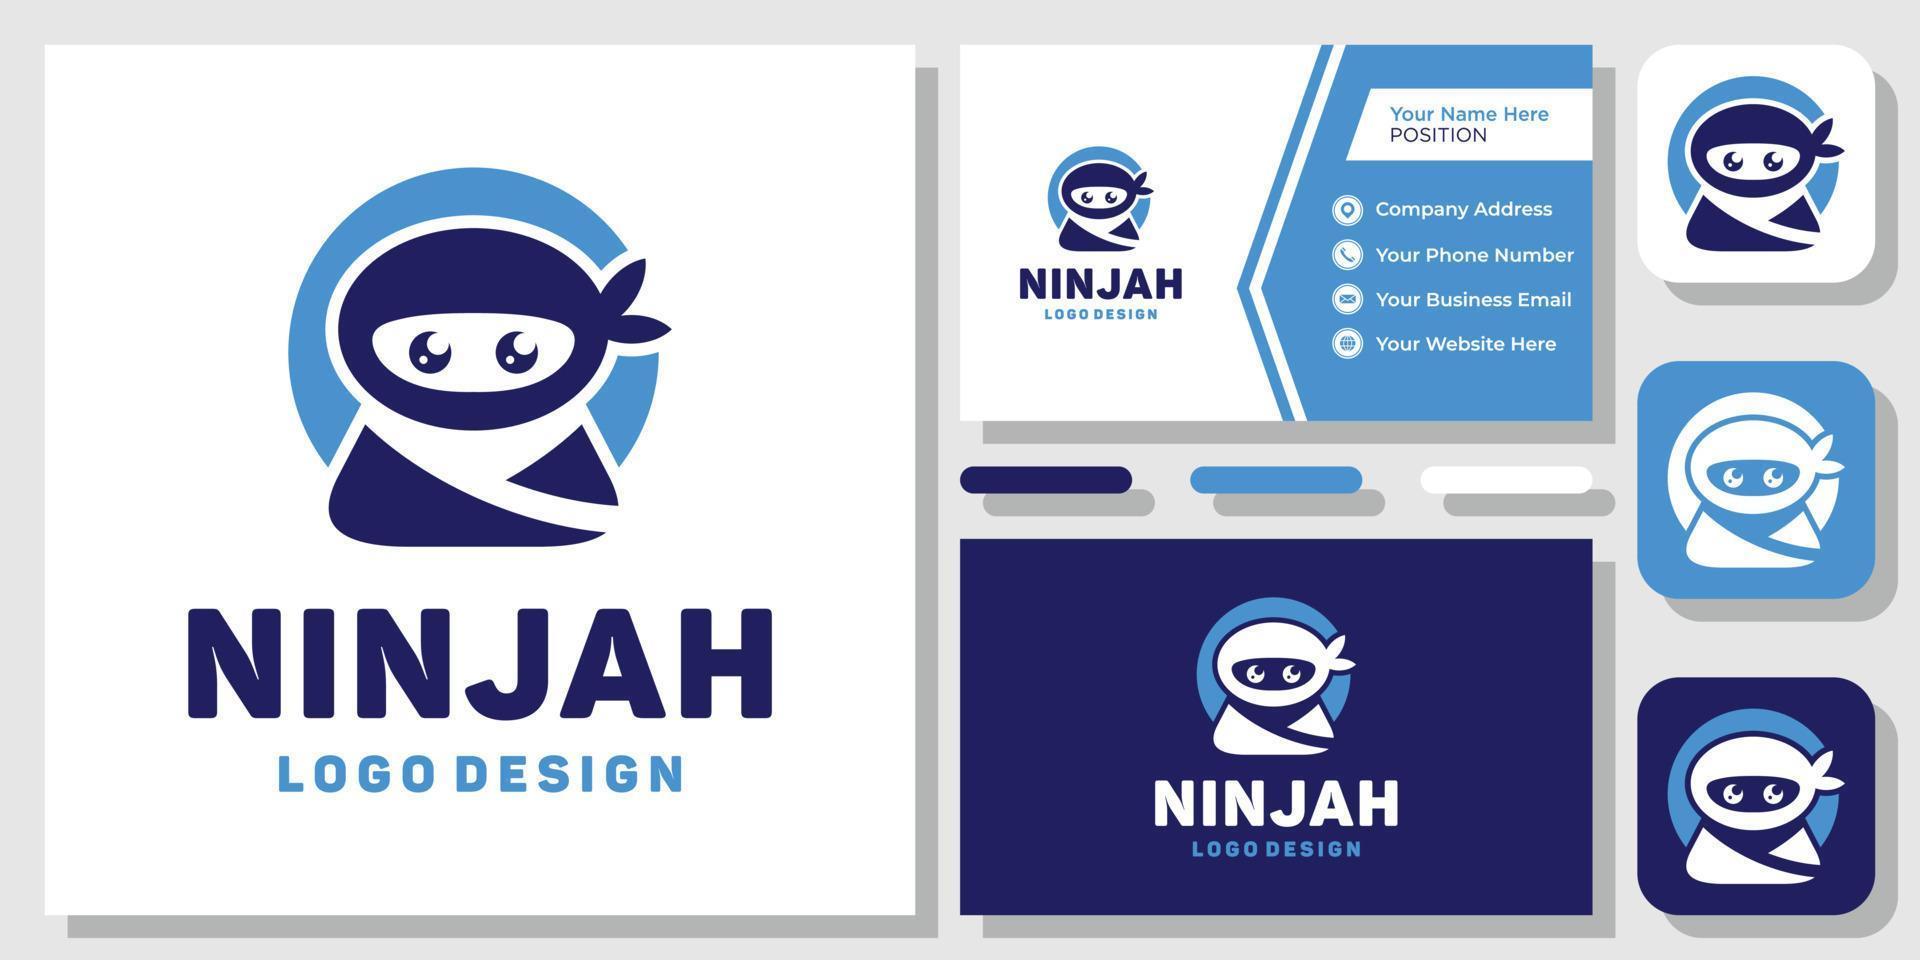 Cute Ninja Cartoon Character Kawaii Katana Warrior Japan Logo Design with Business Card Template vector